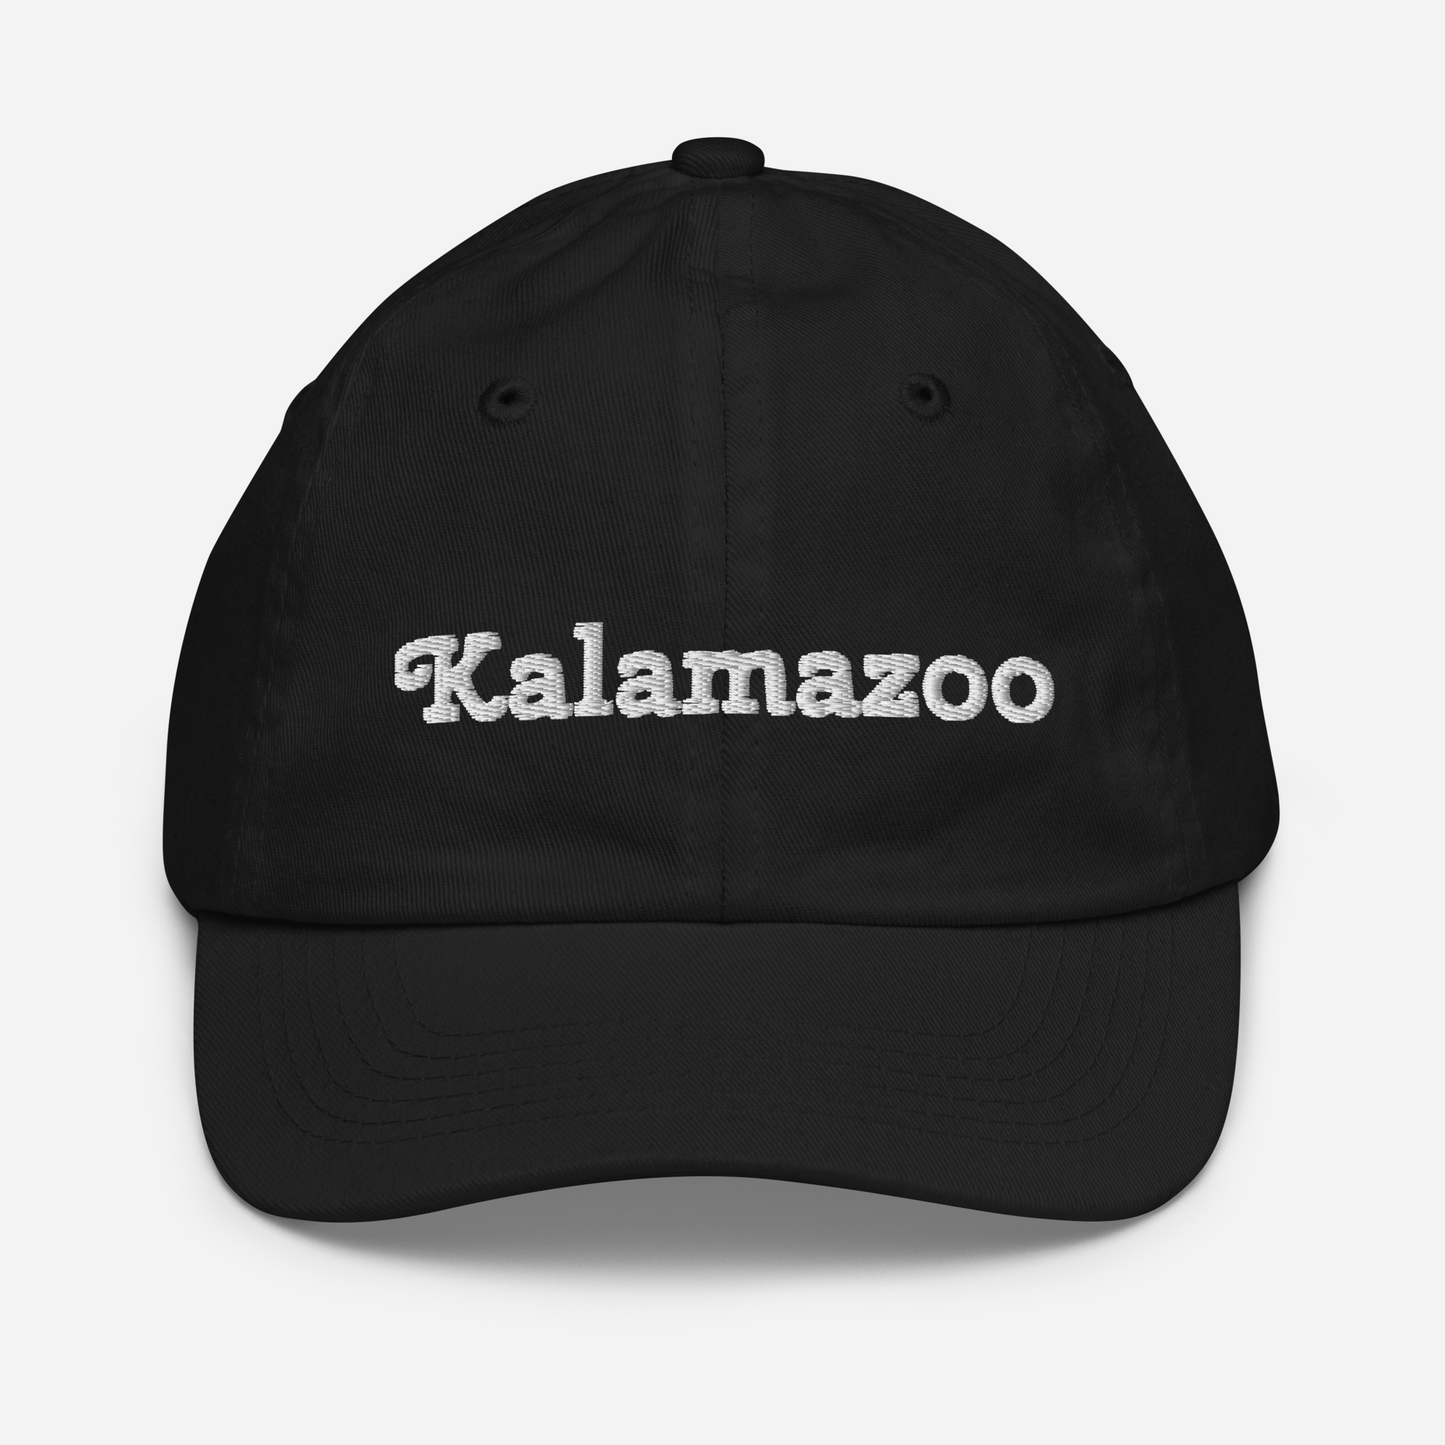 'Kalamazoo' Youth Baseball Cap | White/Navy Embroidery